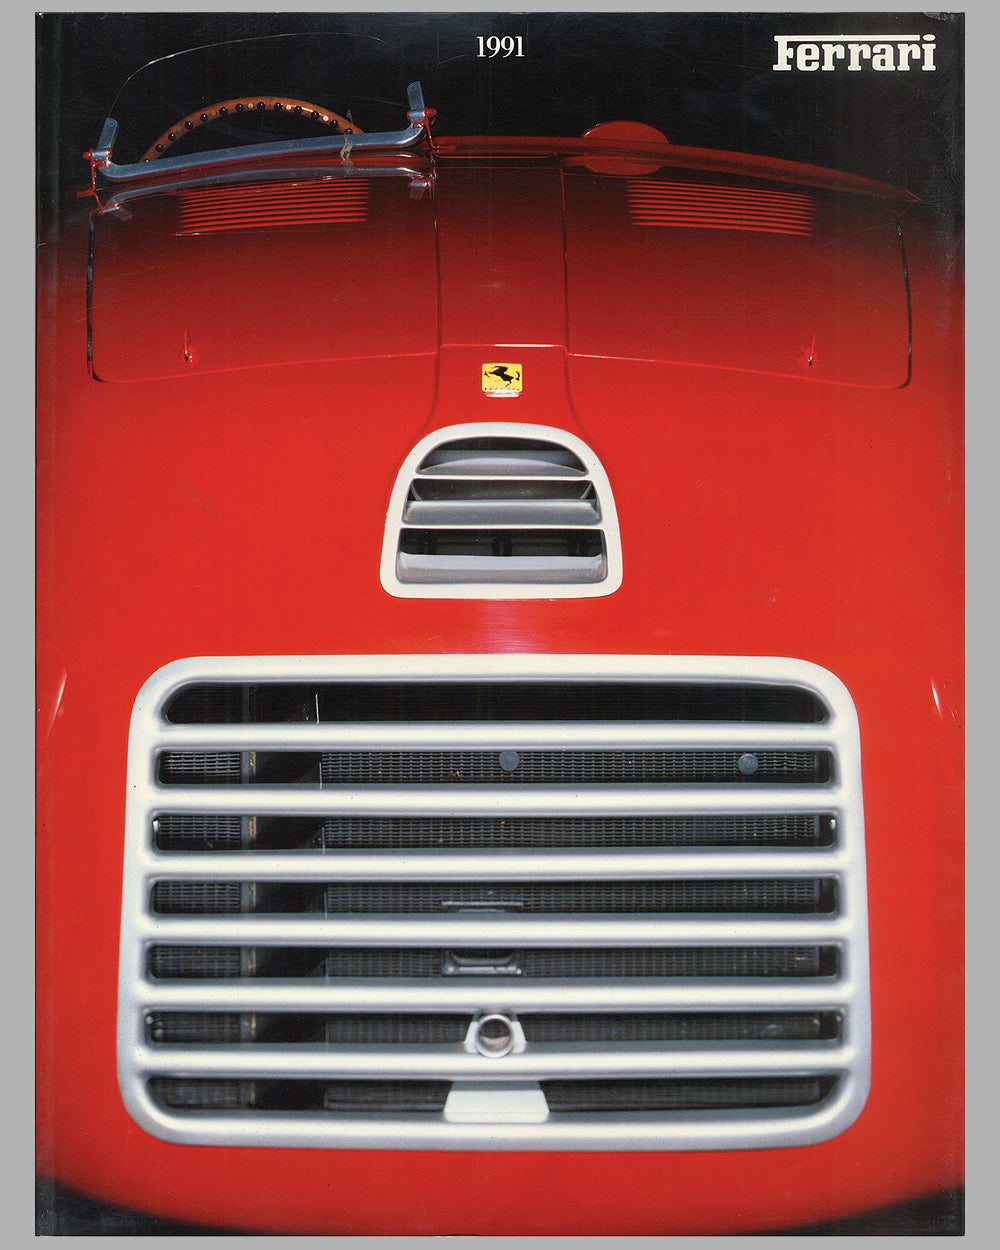 Ferrari 1991 yearbook